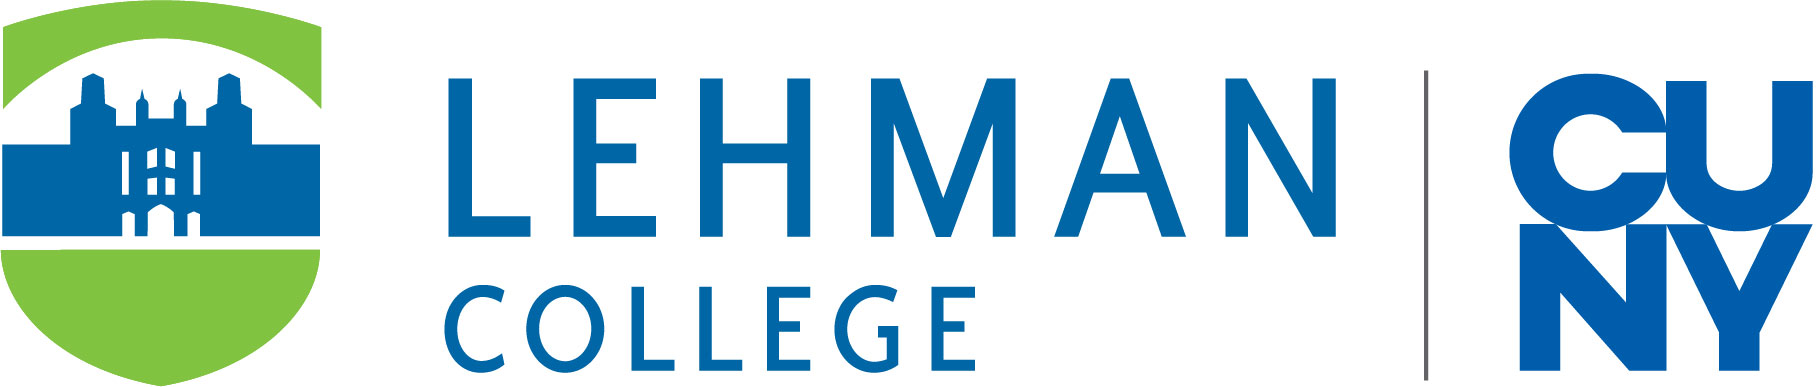 Lehman College CUNY